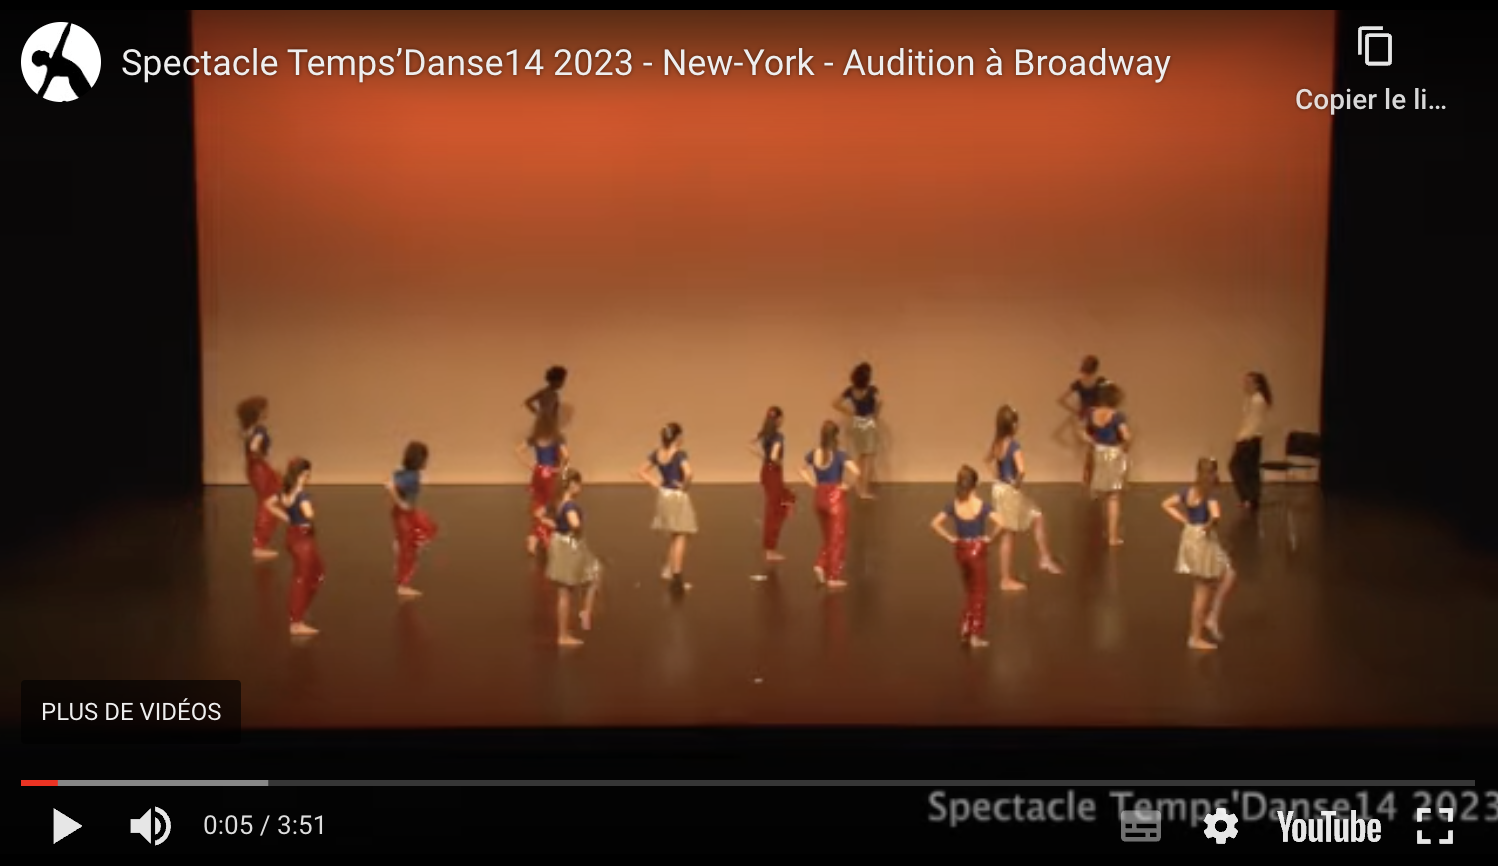 New-York - Audition à Broadway